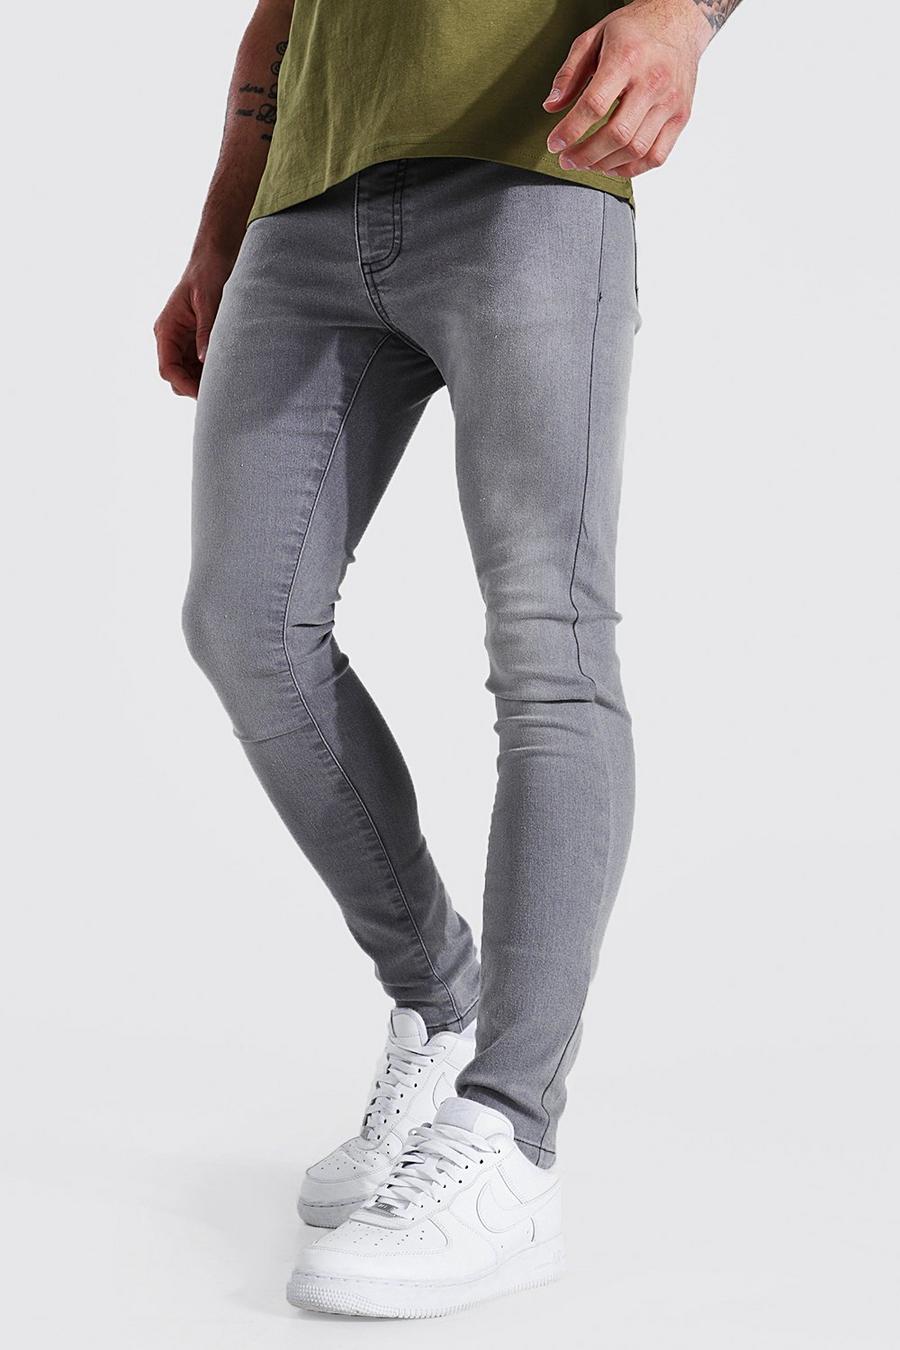 https://media.boohoo.com/i/boohoo/mzz91864_grey_xl/male-grey-super-skinny-jeans/?w=900&qlt=default&fmt.jp2.qlt=70&fmt=auto&sm=fit